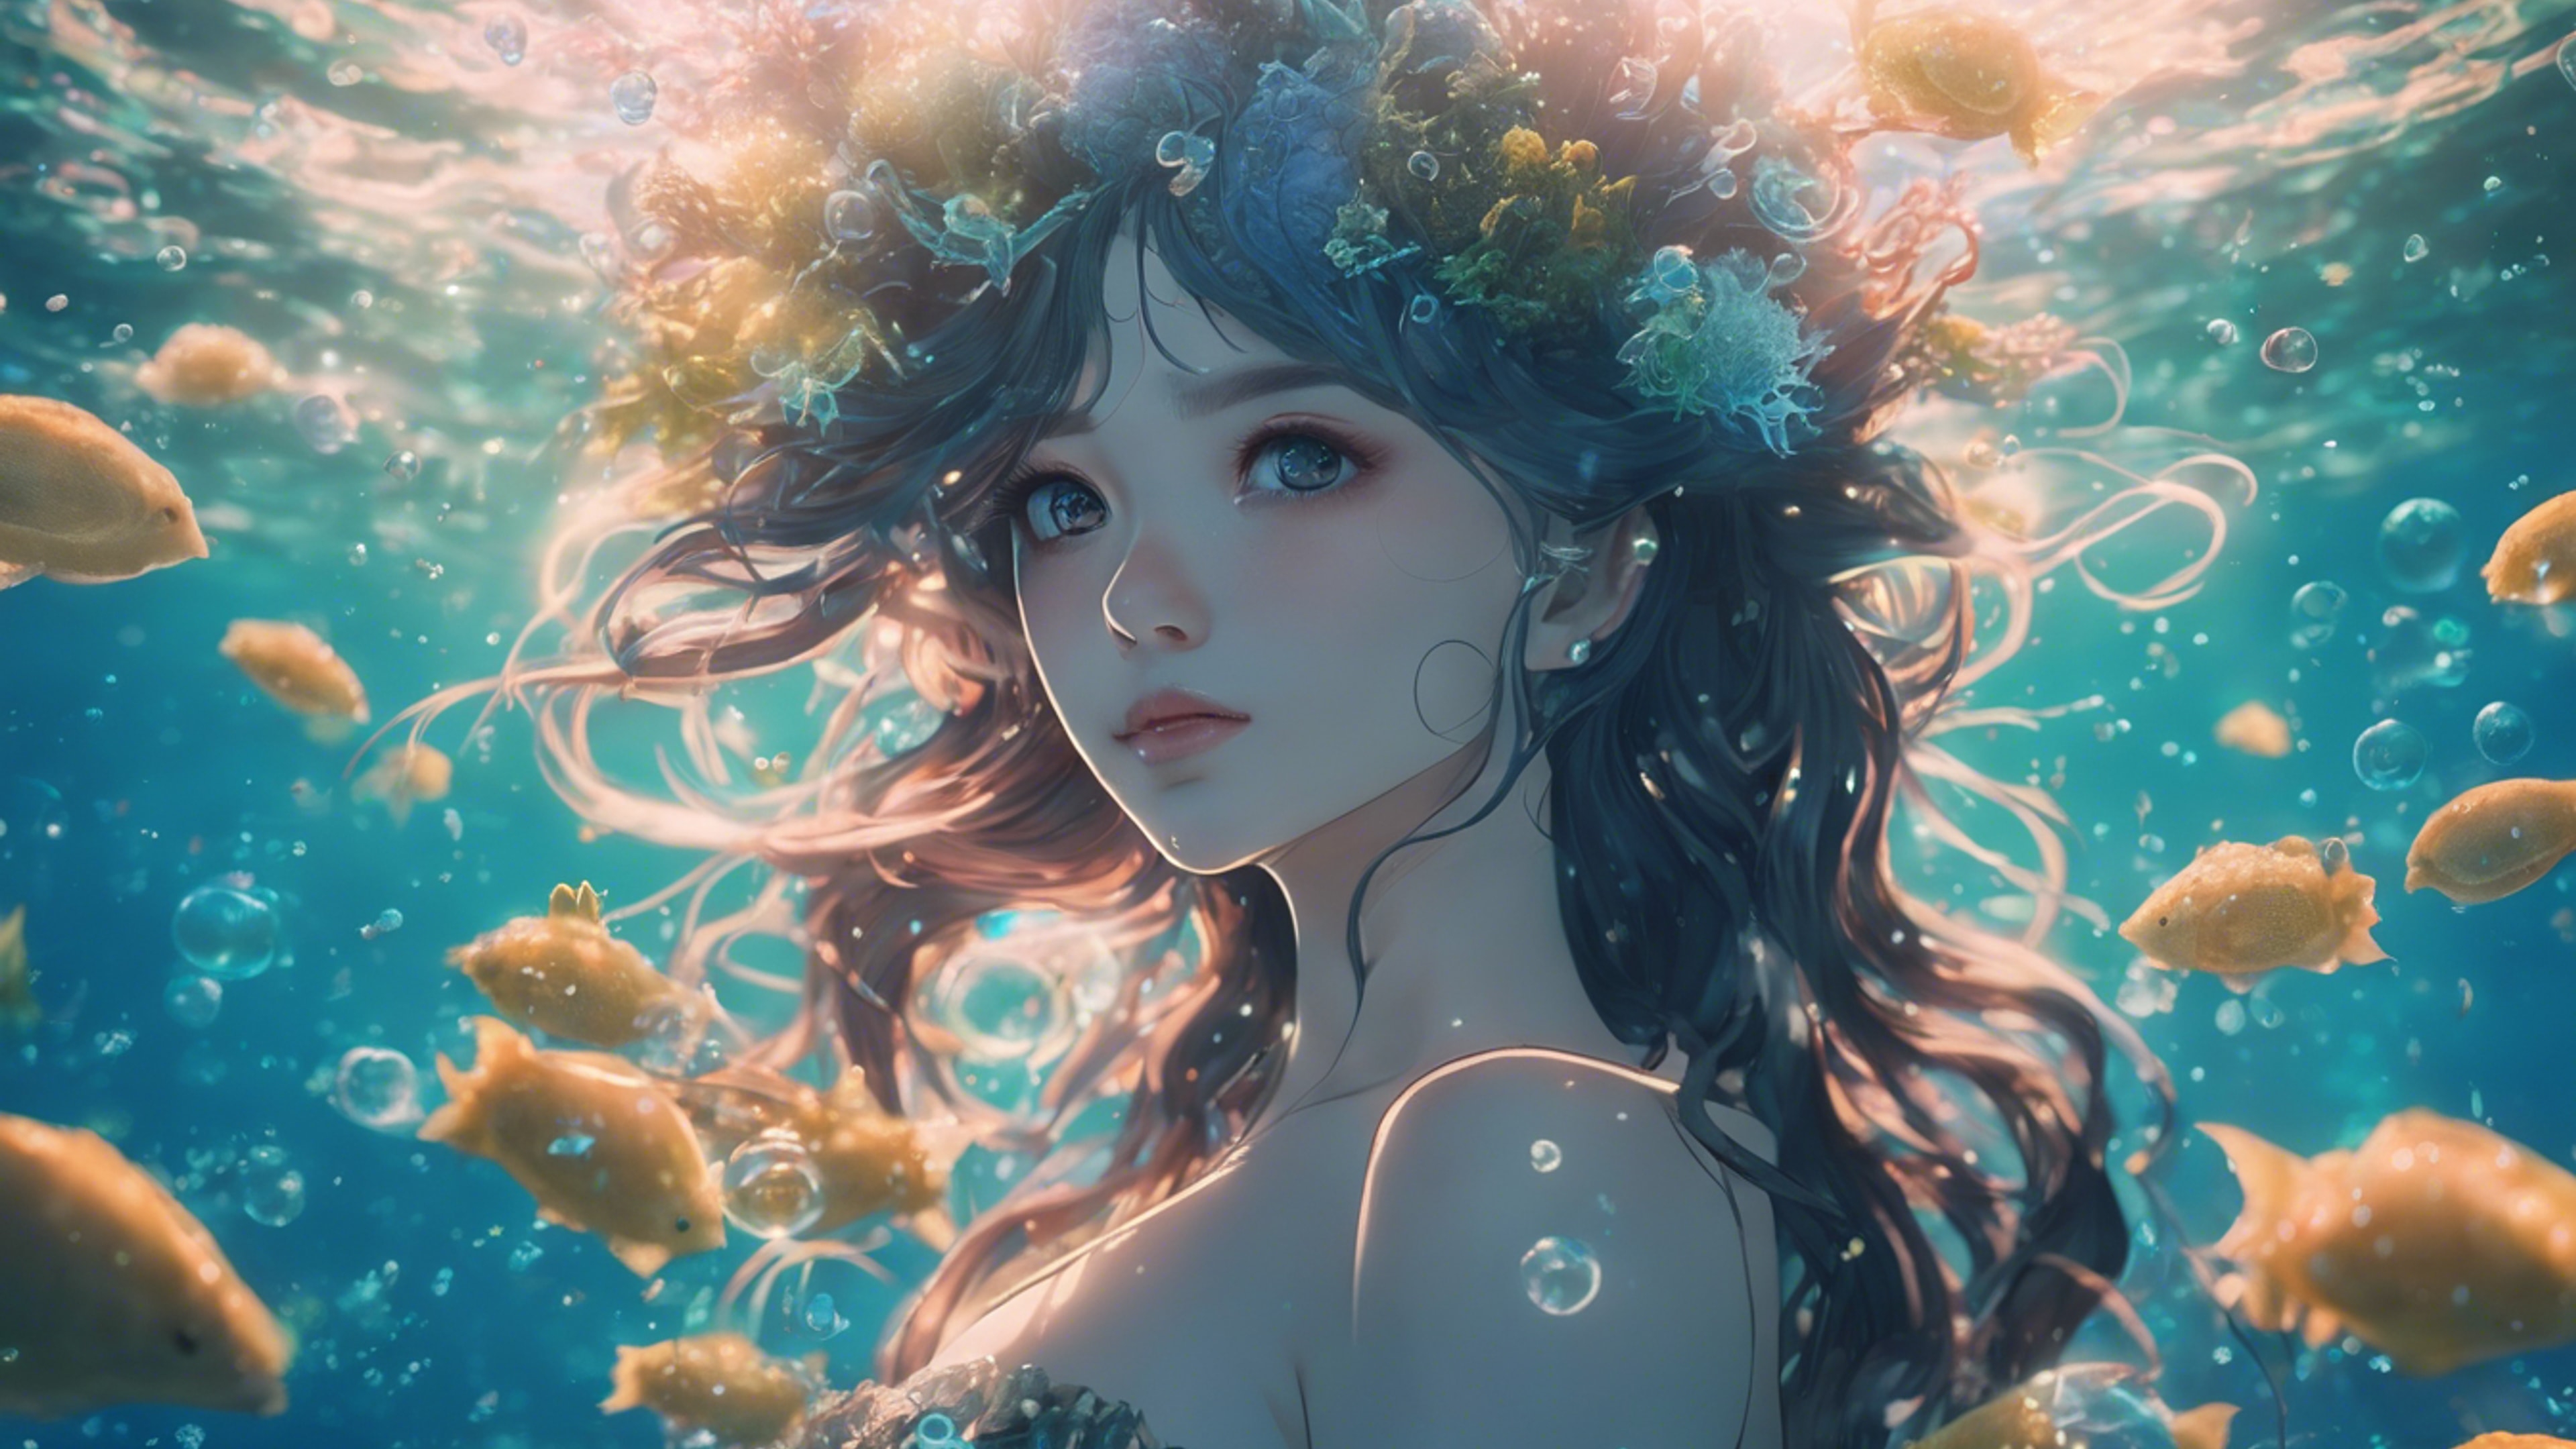 Anime-inspired underwater mermaid kingdom glittering with bioluminescent organisms. Hintergrund[b6d868a85fc94f08be6c]